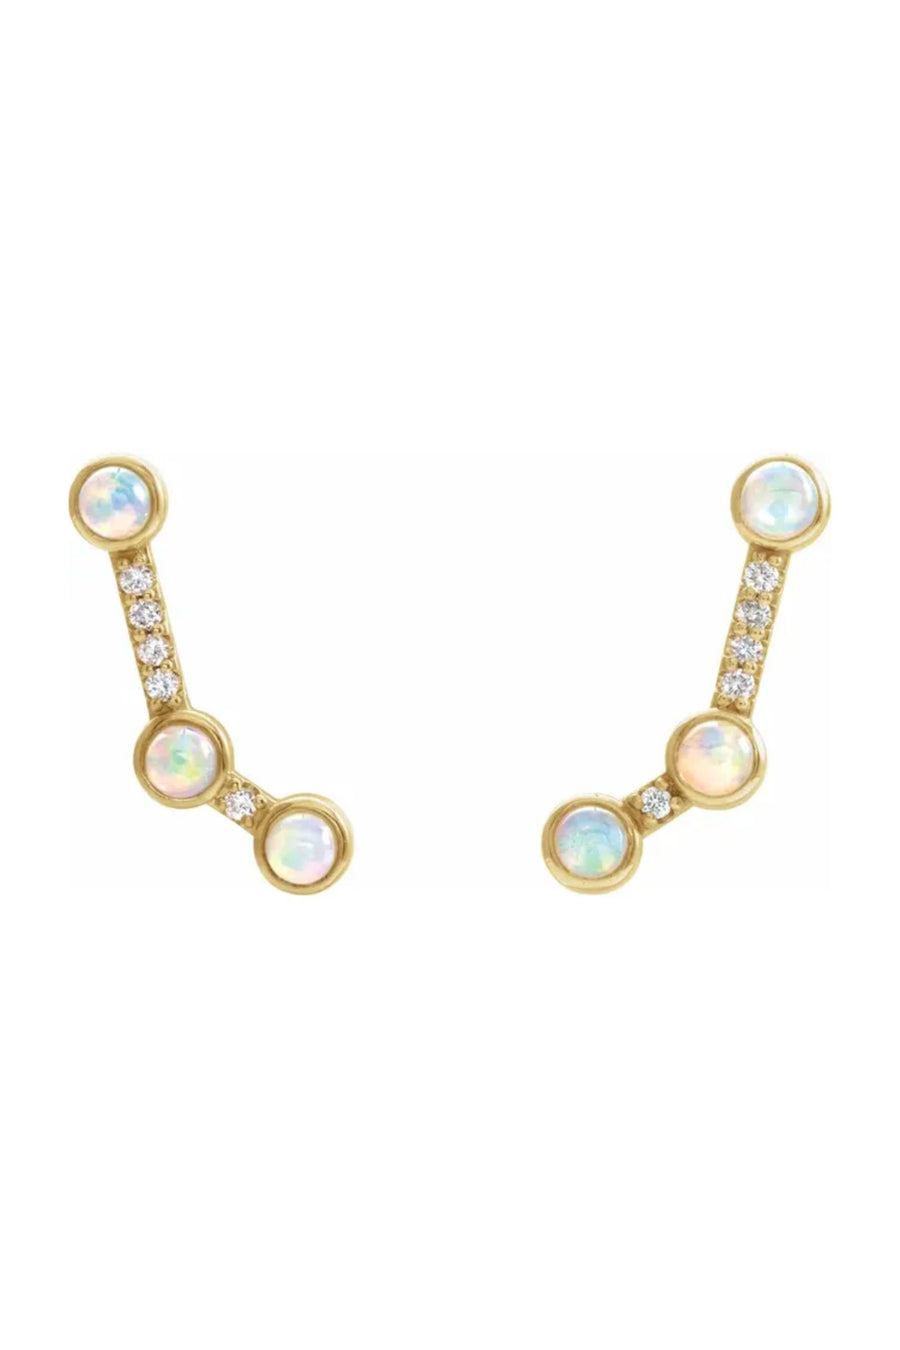 Constellation Climber Earrings - Ethiopian Opal & Diamonds - Pavilion